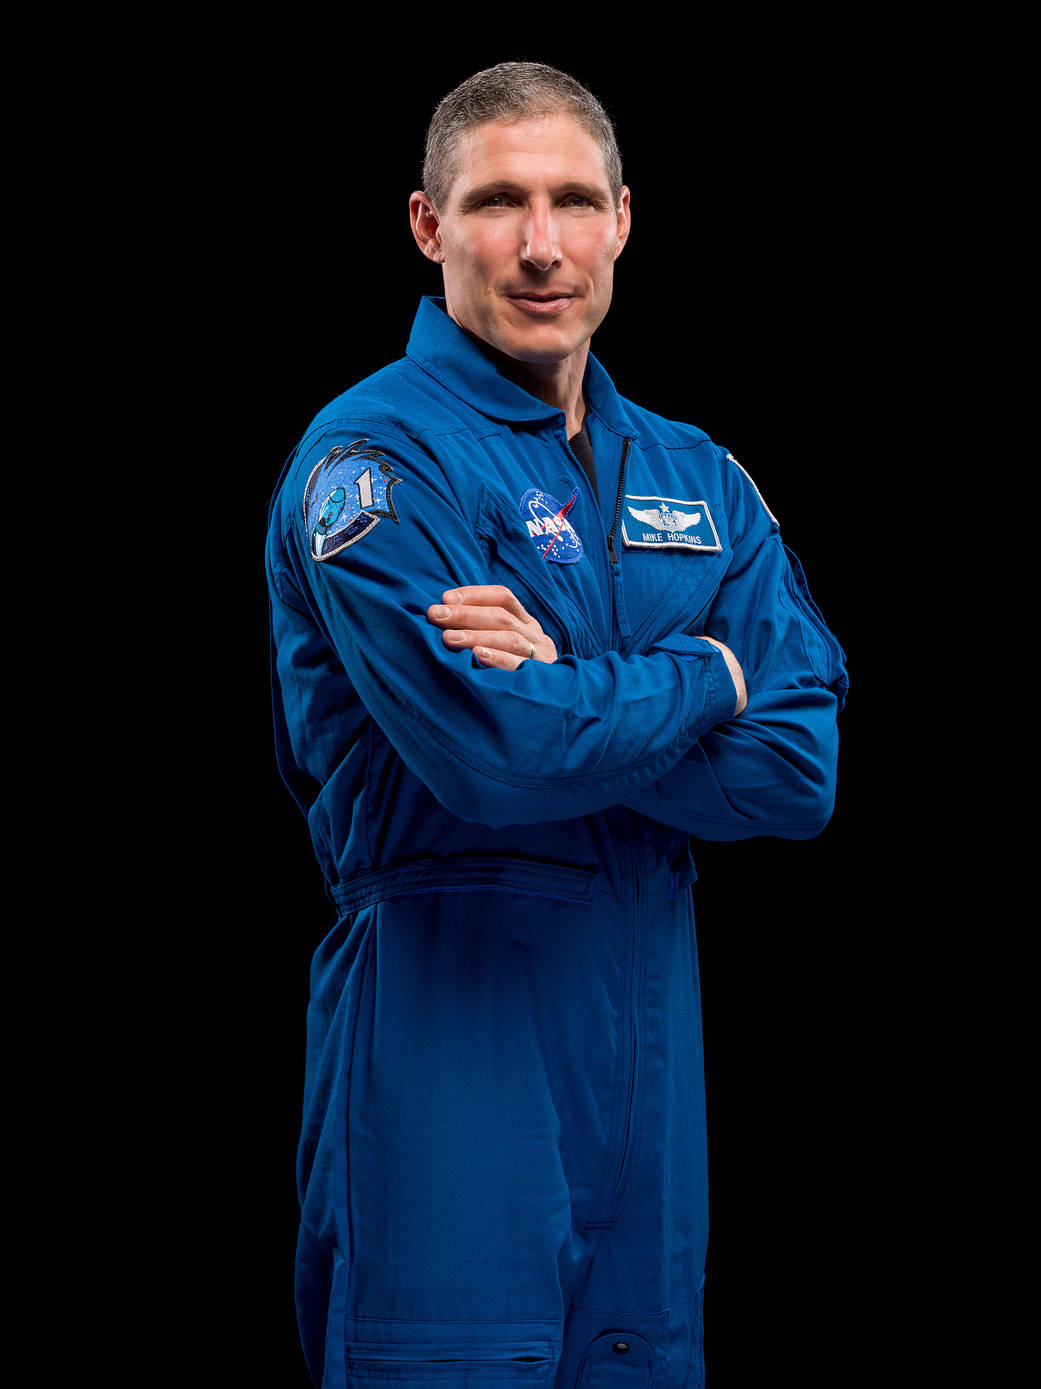 SpaceX Crew-1 Commander Mike Hopkins of NASA